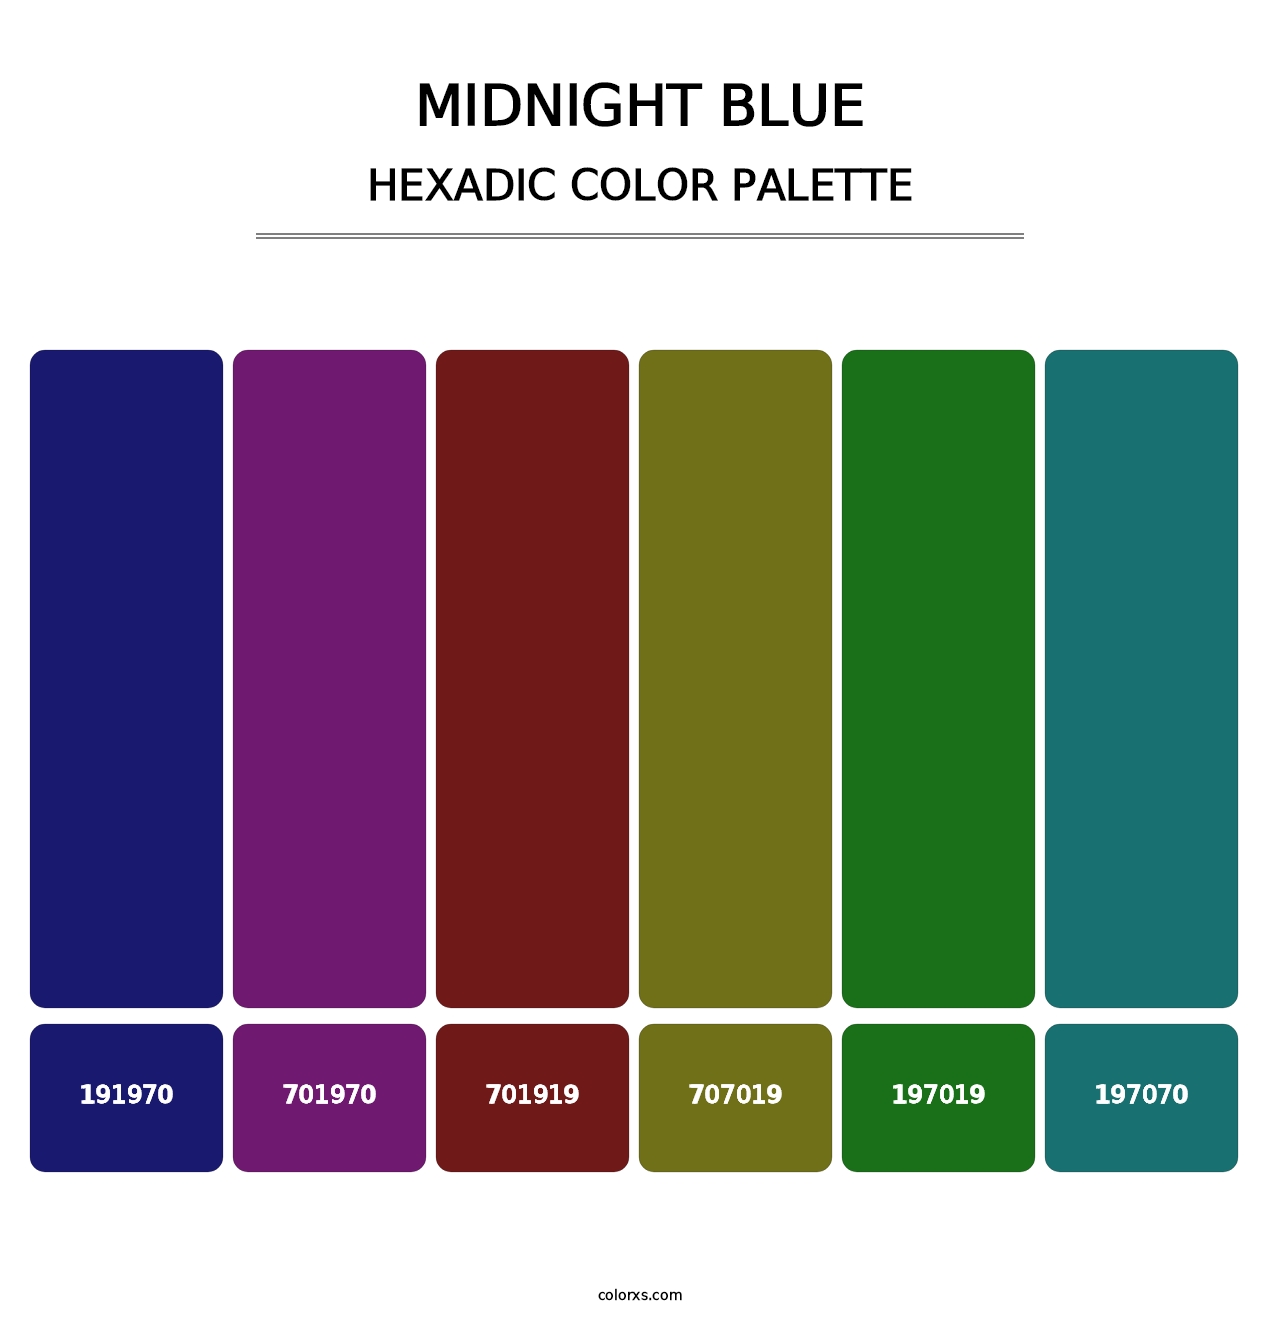 Midnight Blue - Hexadic Color Palette